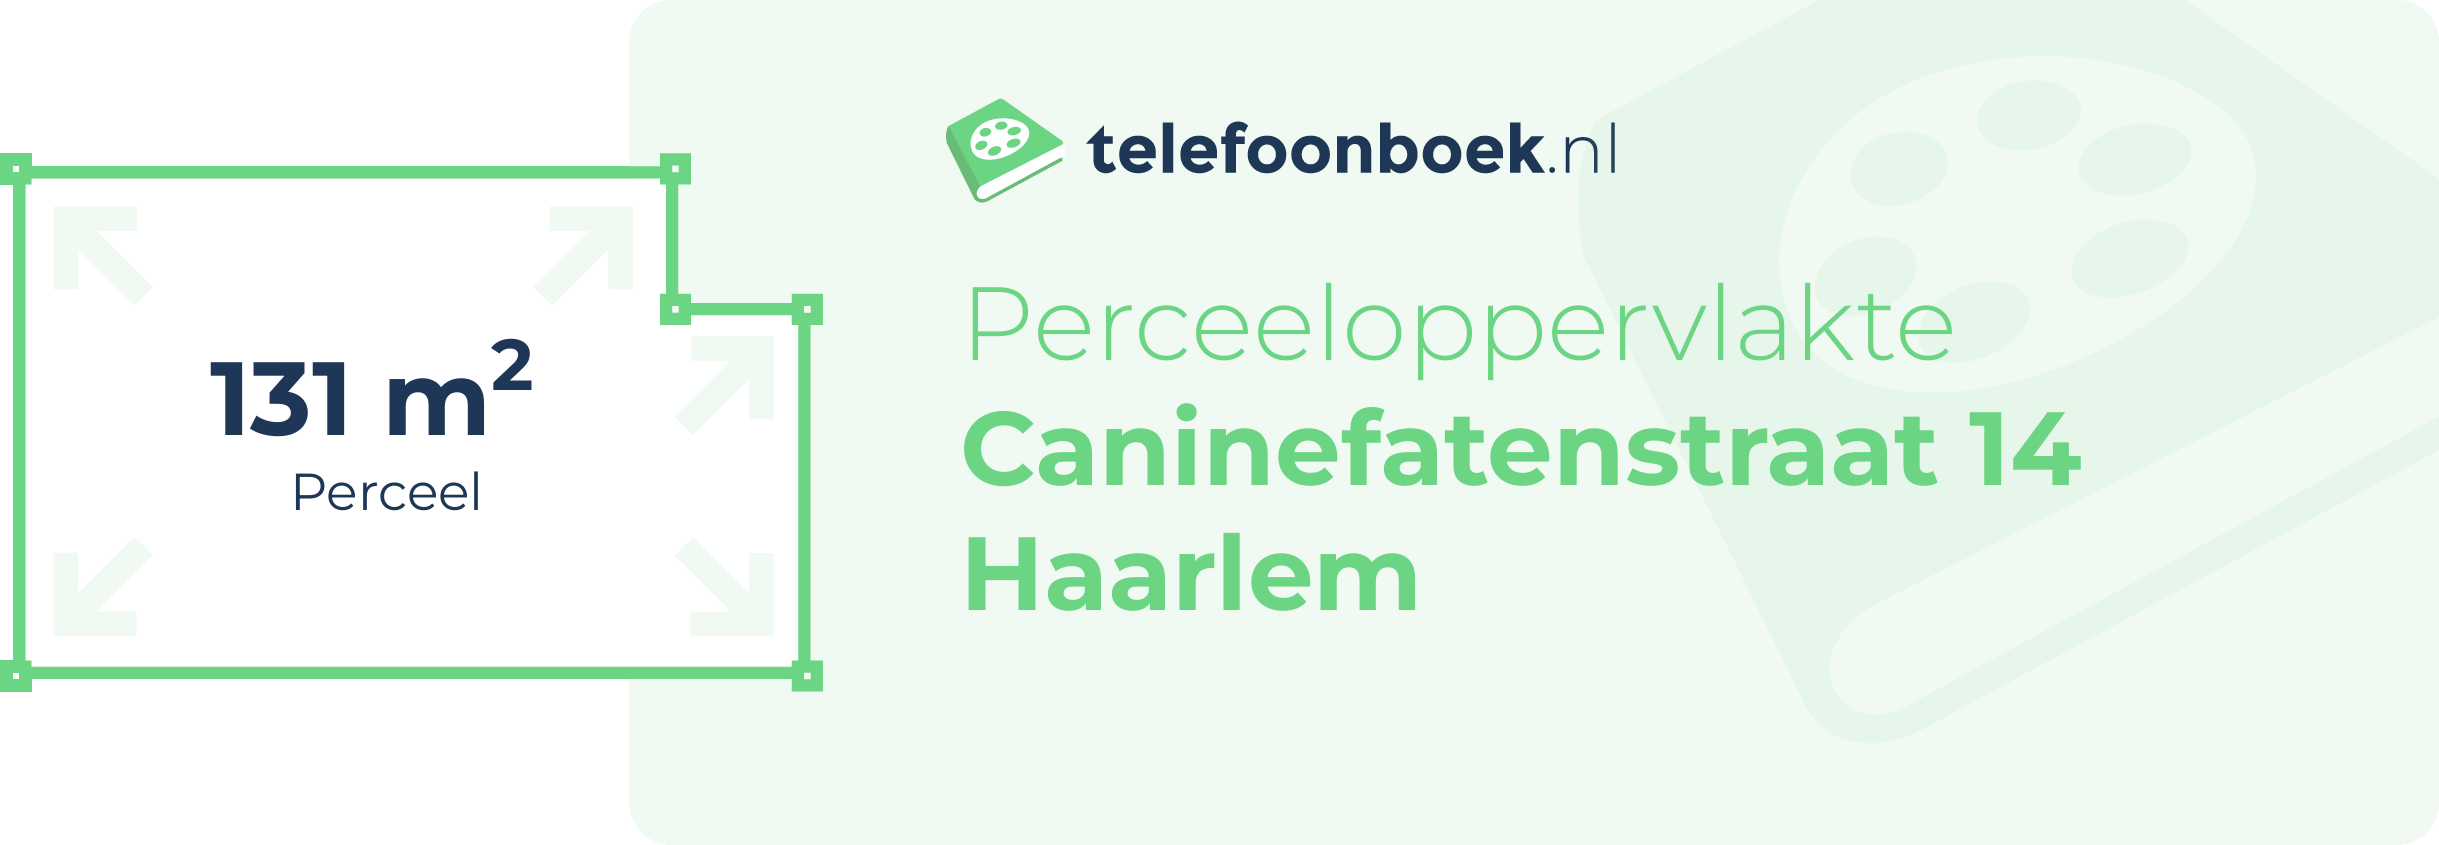 Perceeloppervlakte Caninefatenstraat 14 Haarlem